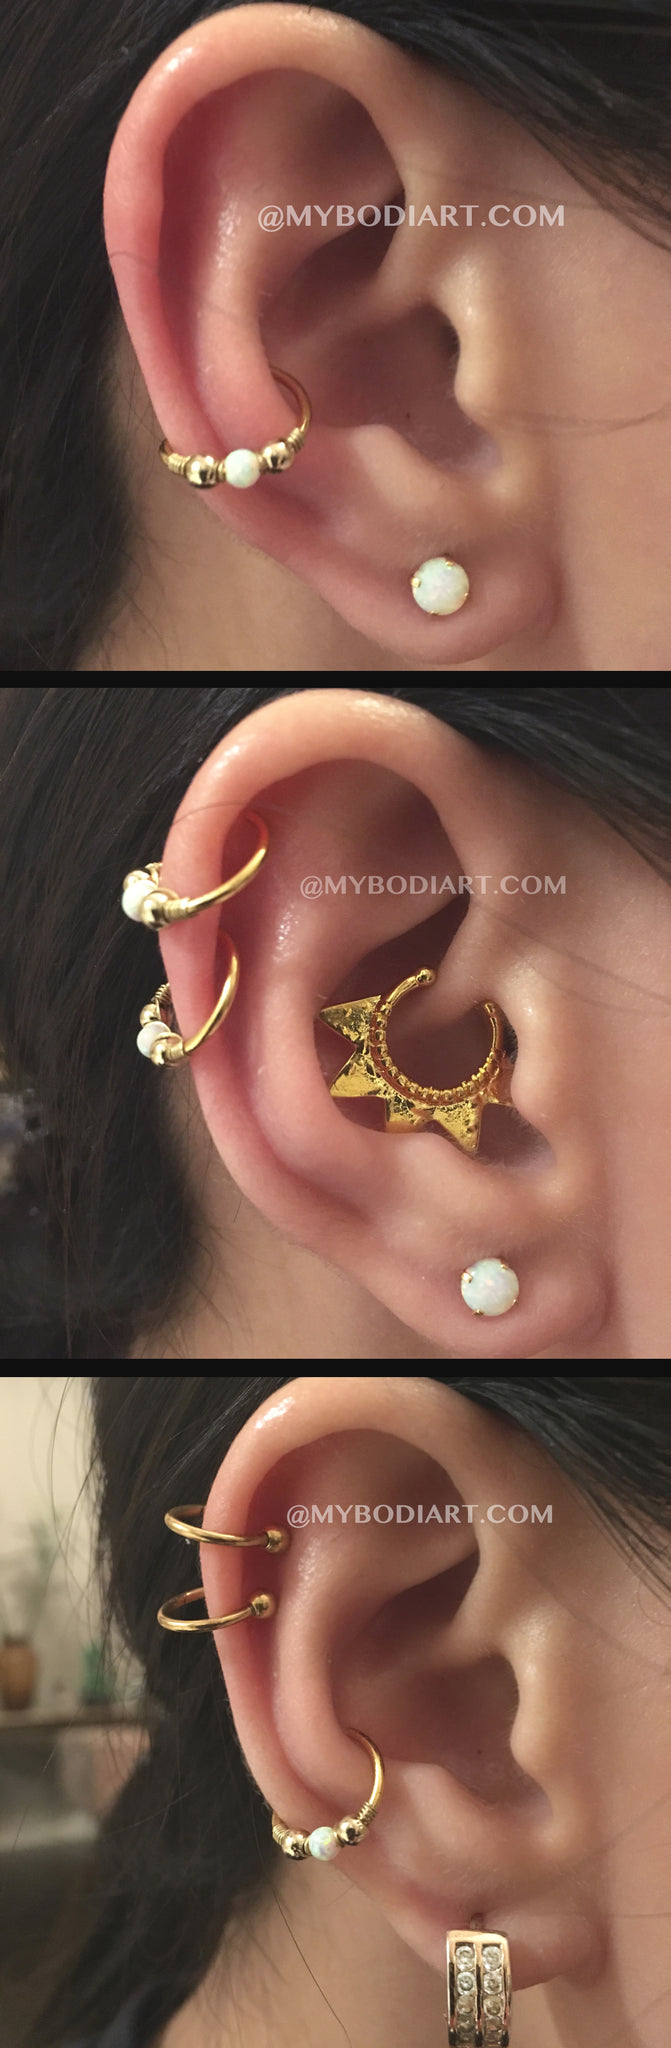 Cute Gold Ear Piercing Ideas for Teenagers - ideas para perforar orejas - cartilage conch daith rook ear lobe helix tragus earring ring hoop stud jewelry jewellery - www.MyBodiArt.com